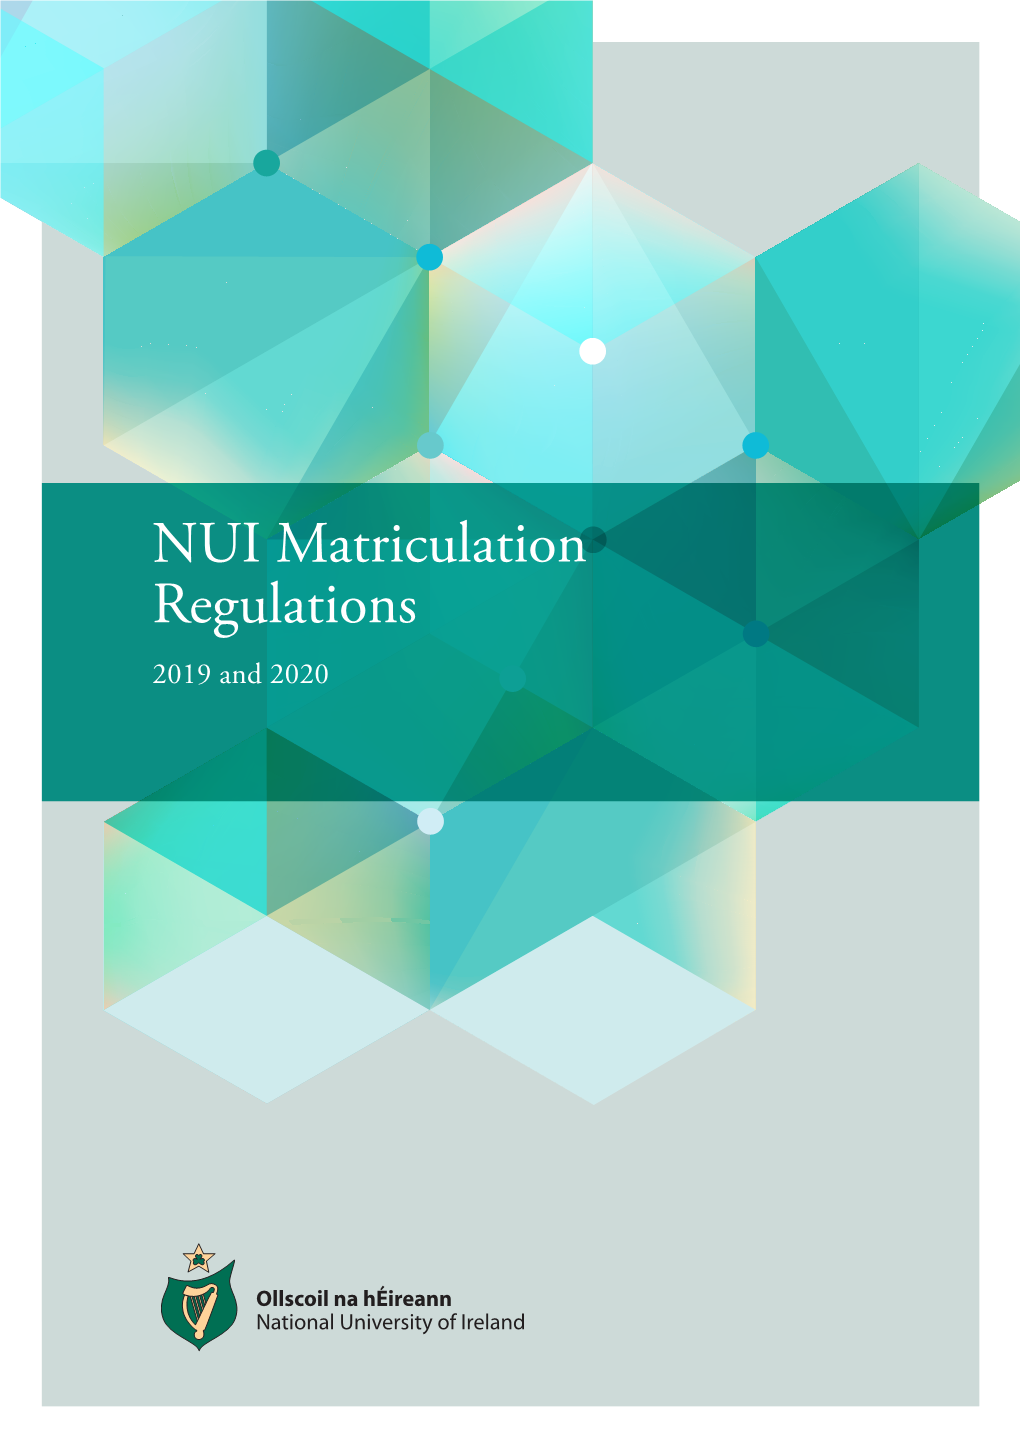 NUI Matriculation Regulations – 2019 and 2020